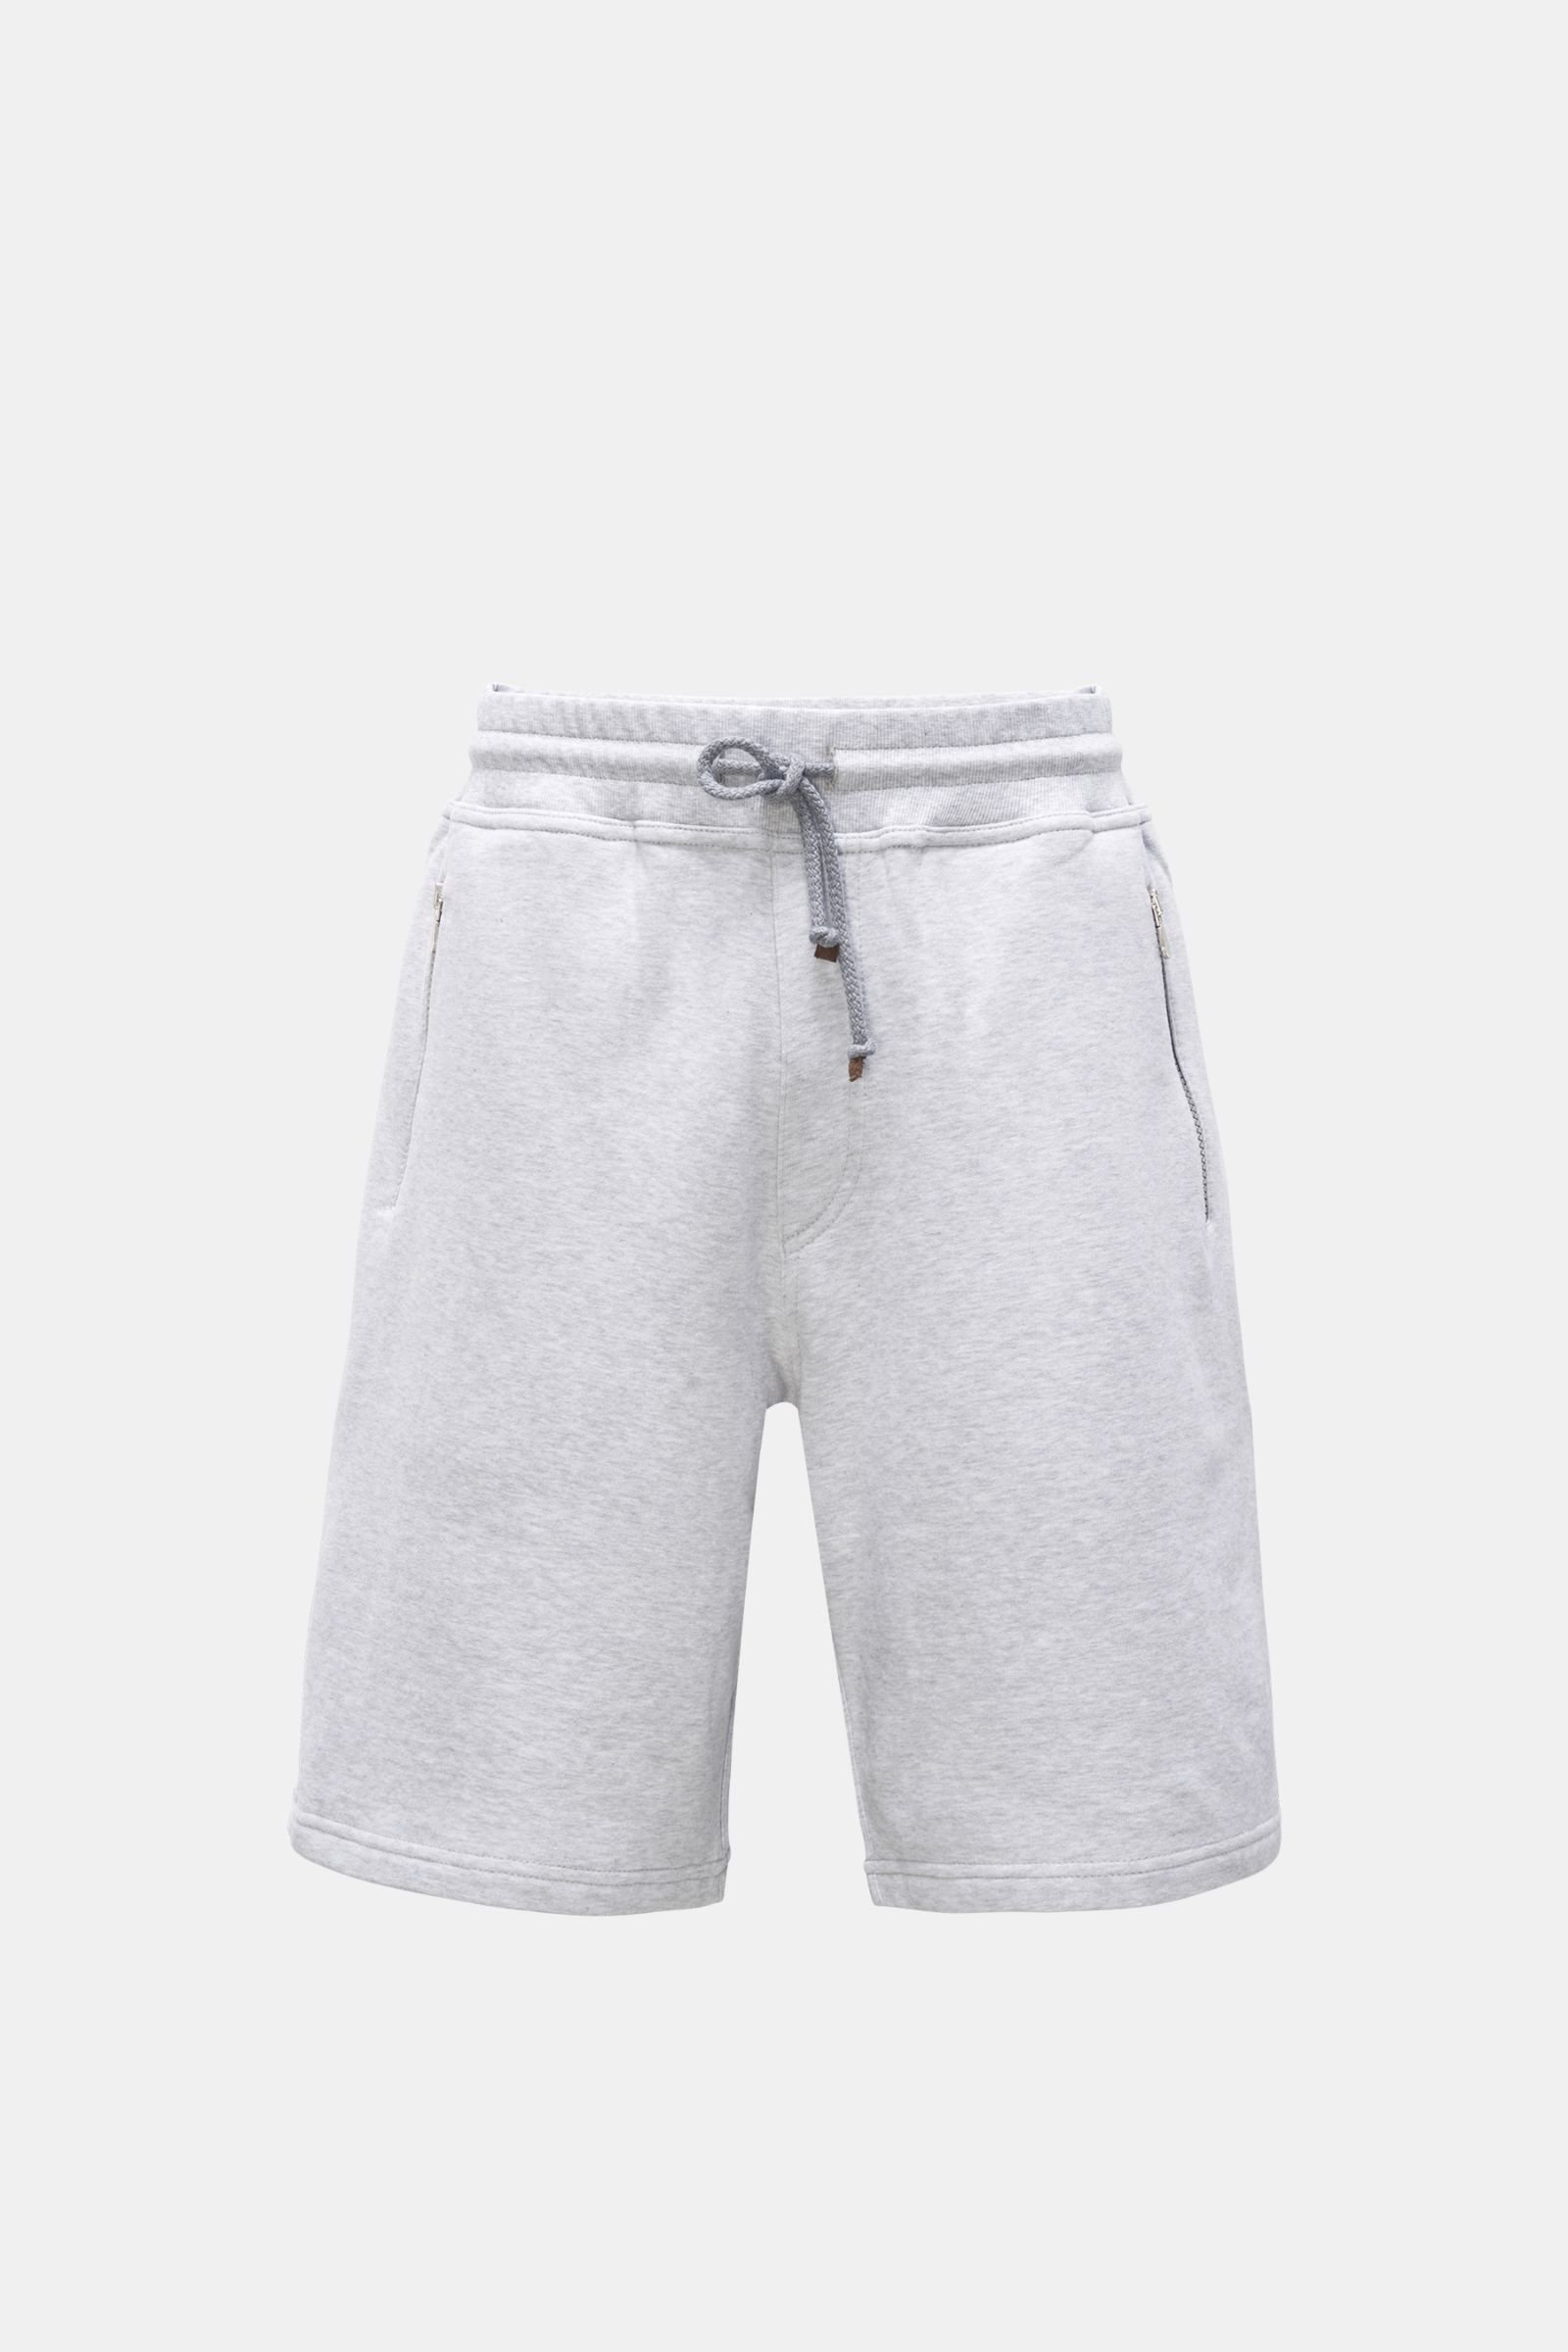 Sweat shorts grey